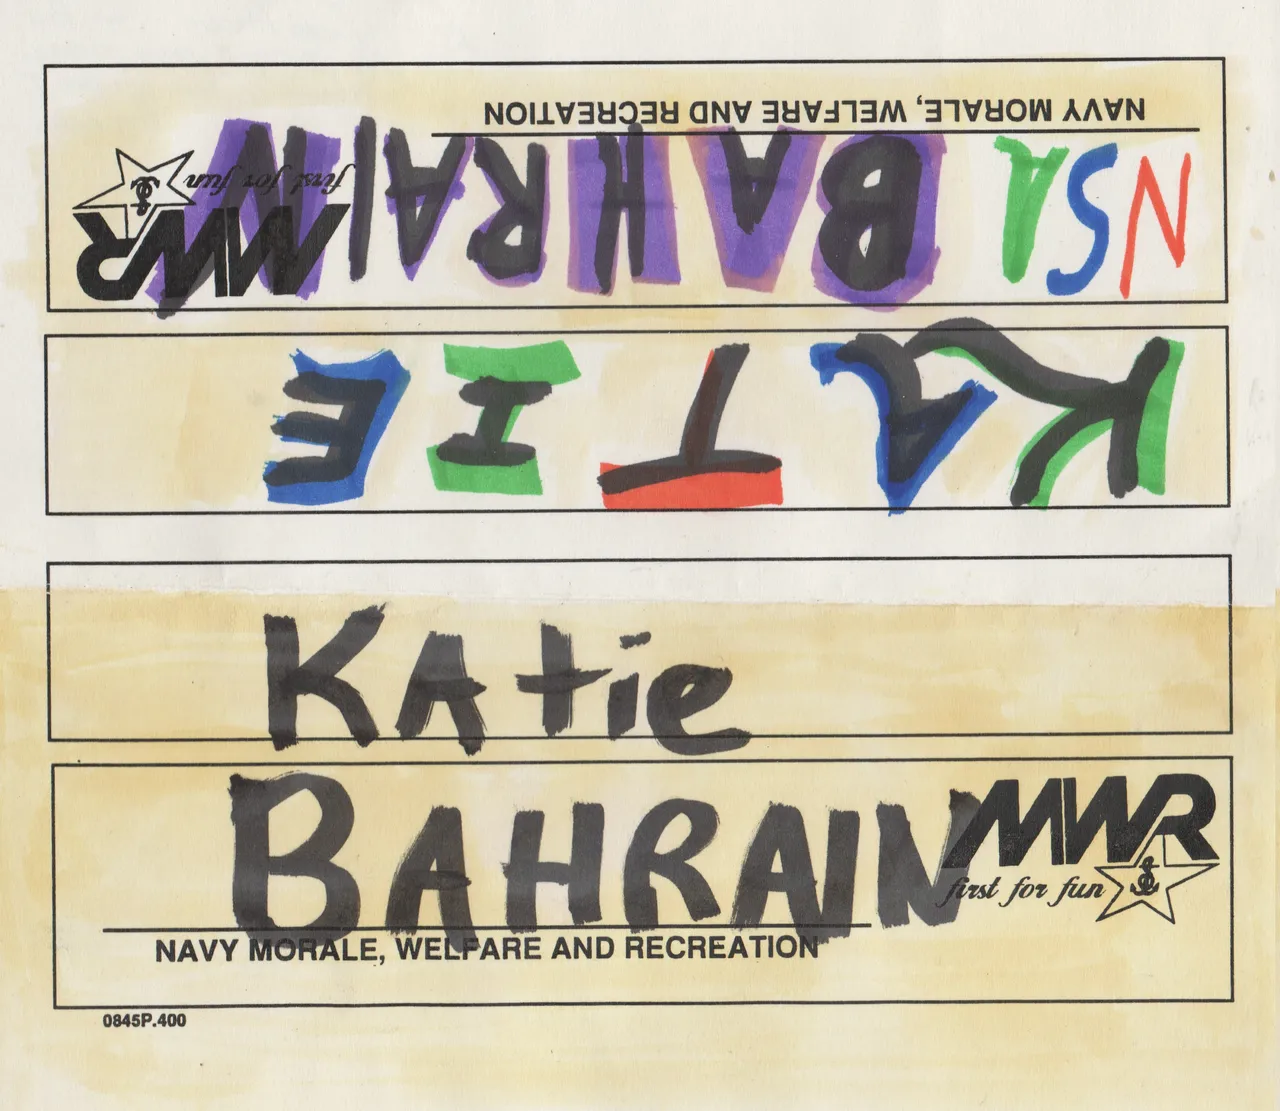 2001 apx - Bahrain - Katie-1.jpg